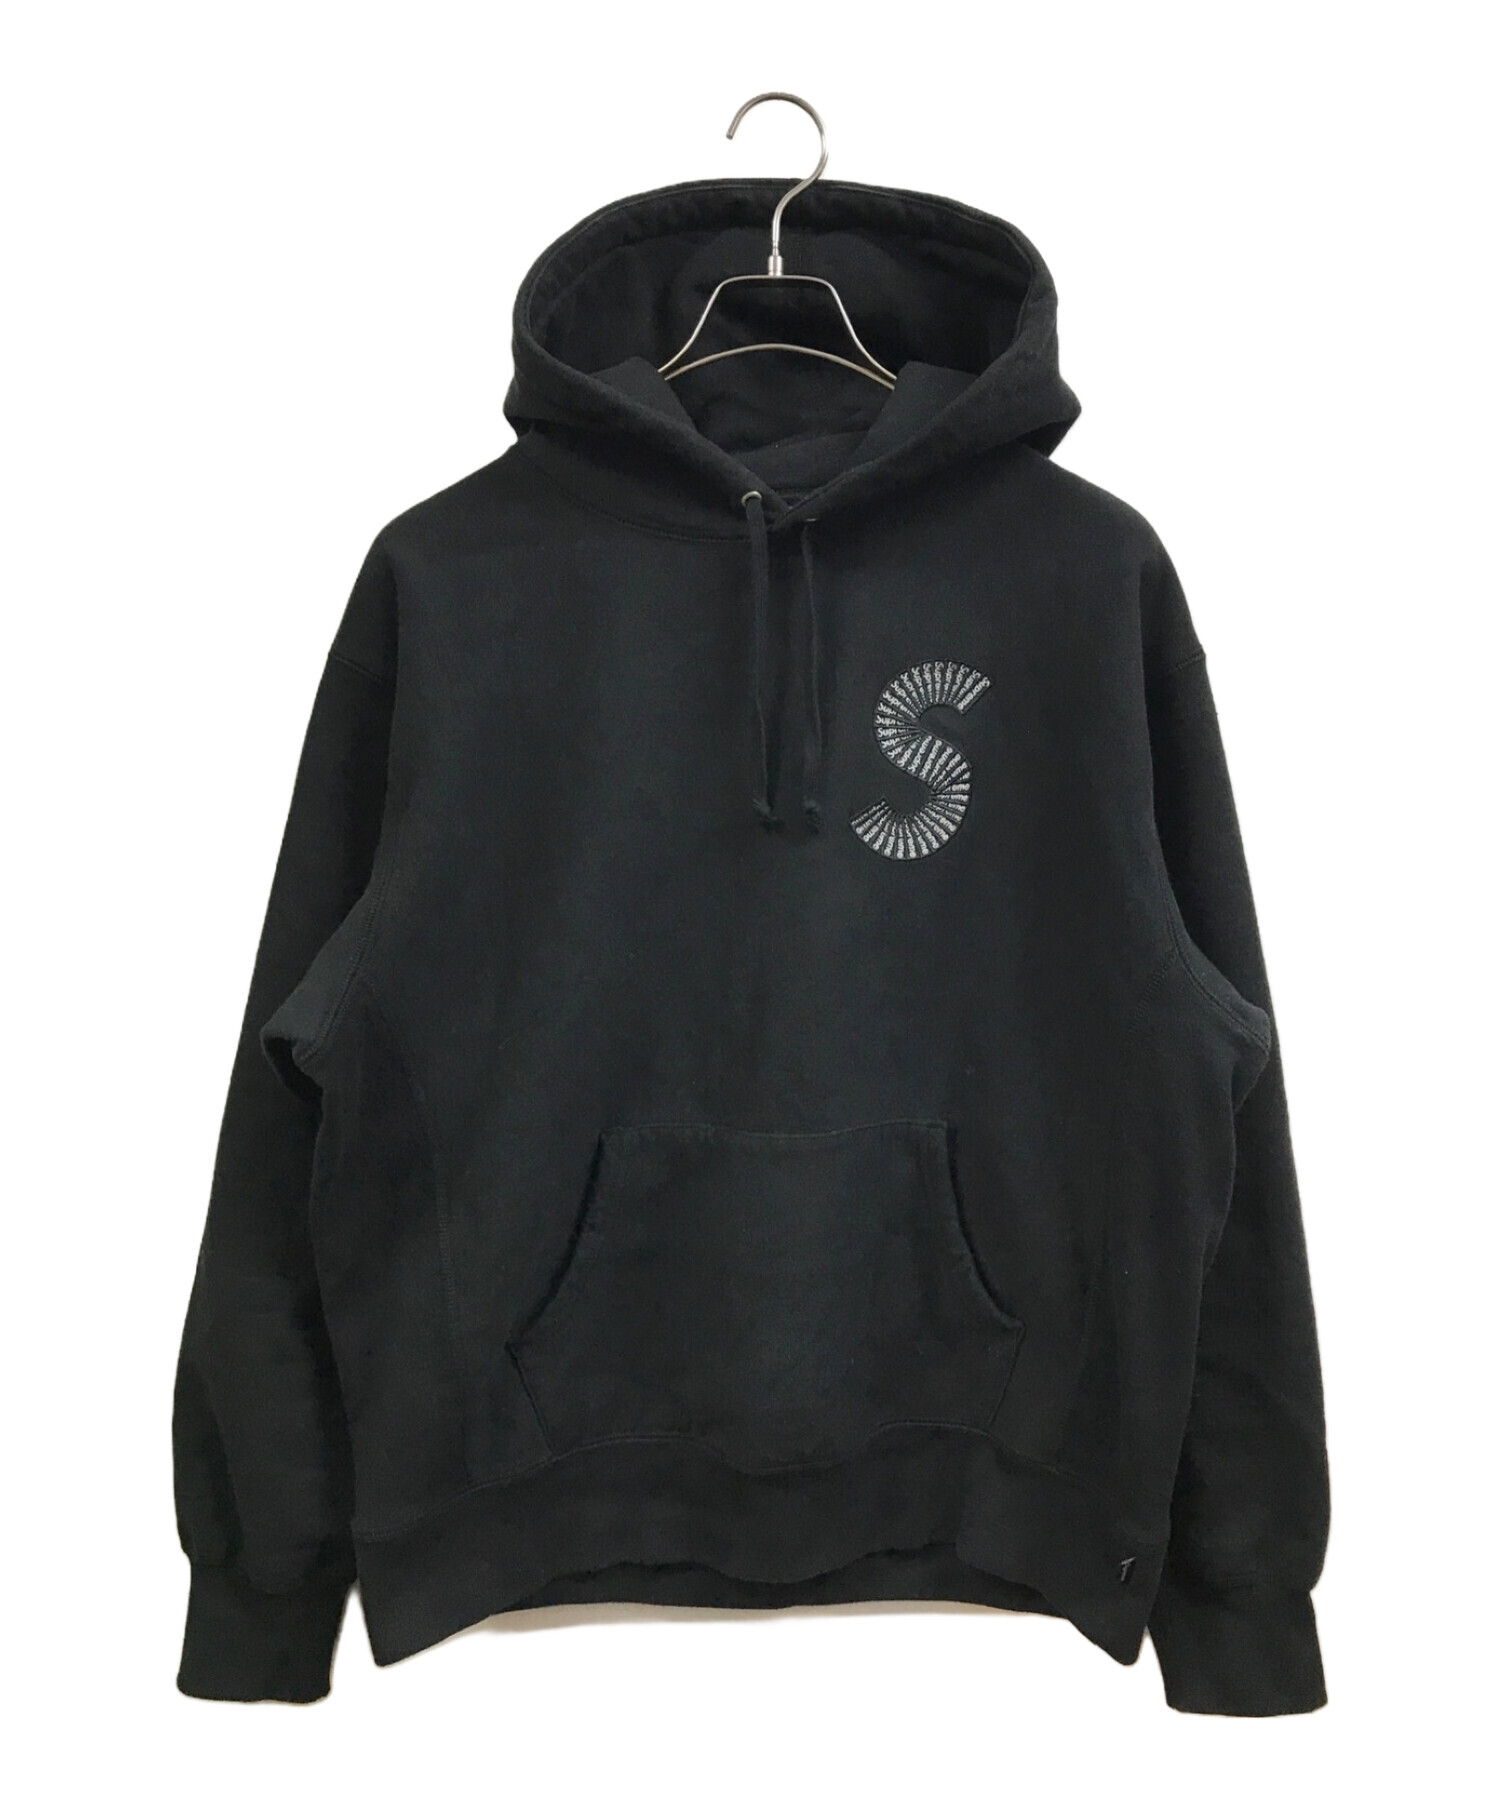 supSupreme S Logo Hooded Sweatshirt Black